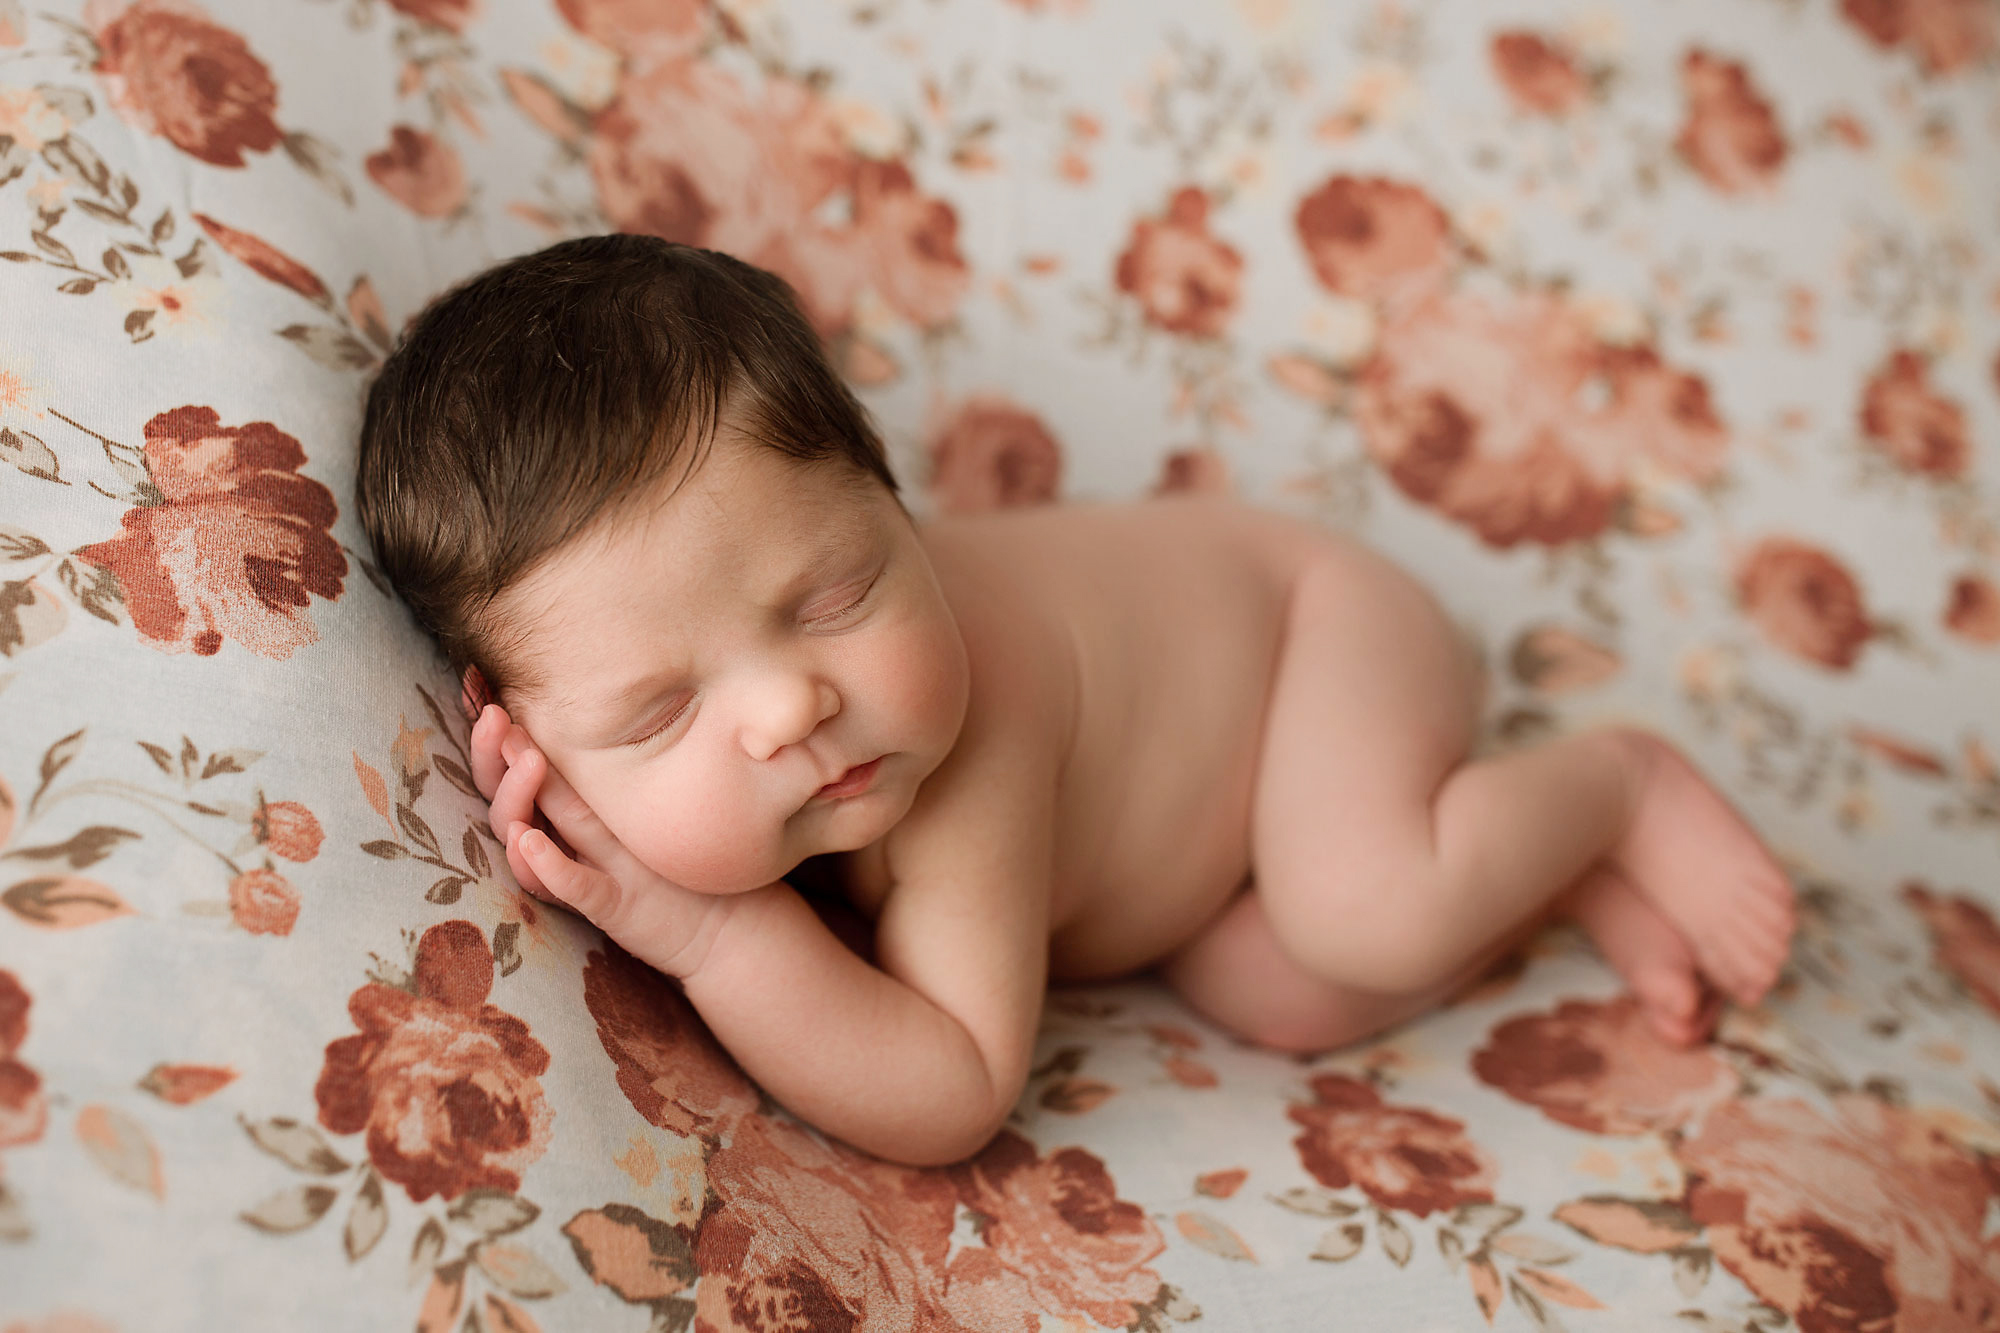 newborn sleeping on a floral blanket, side lying pose